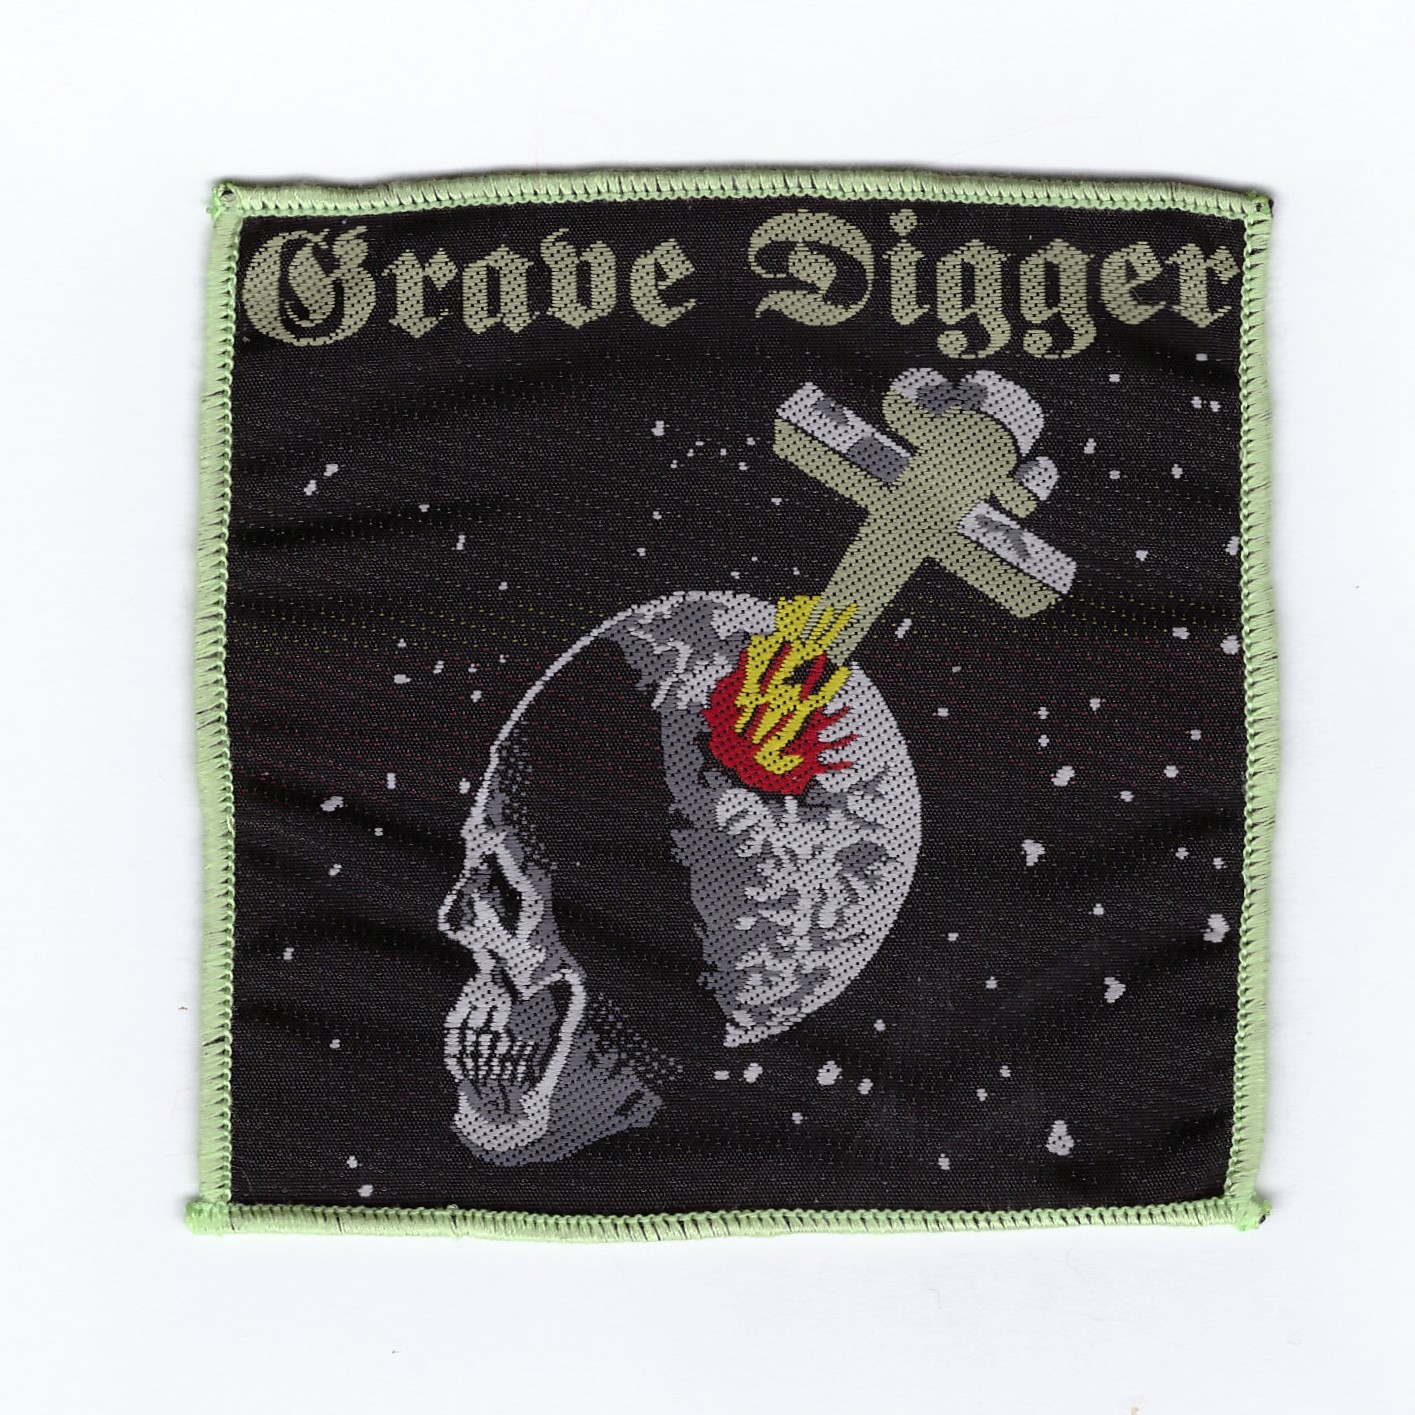 Grave Digger - Heavy Metal Breakdown